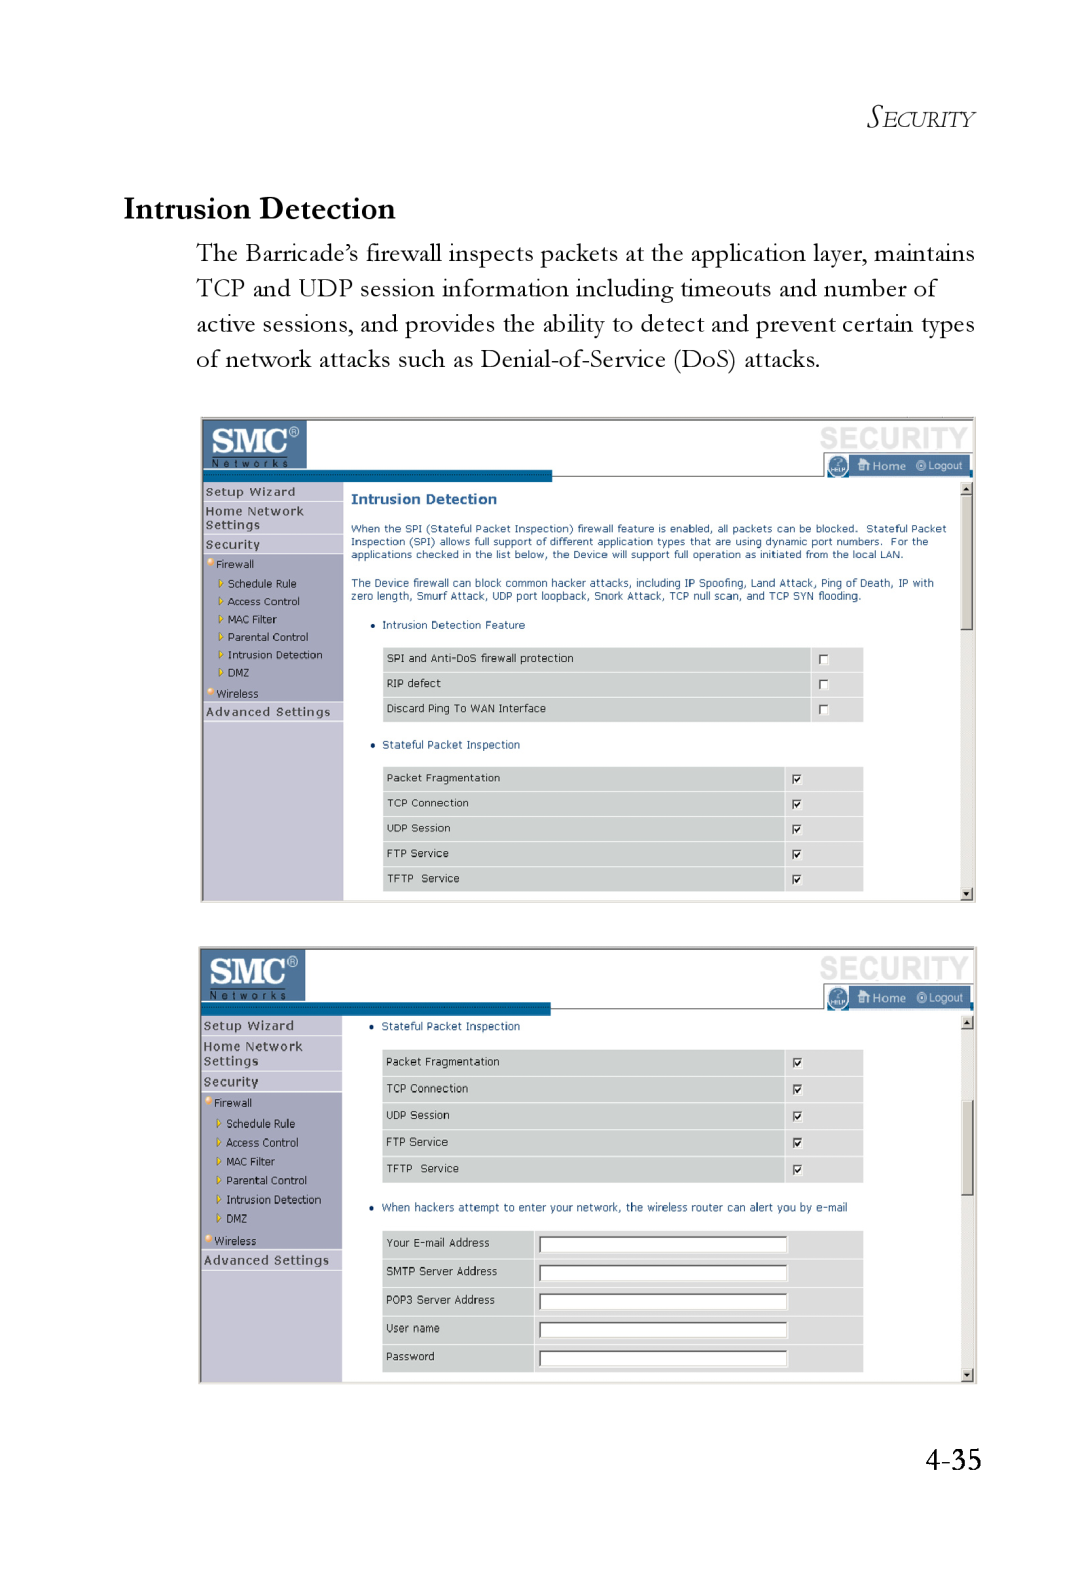 SMC Networks SMCWBR14T-G manual 4-35, Intrusion Detection, Security 